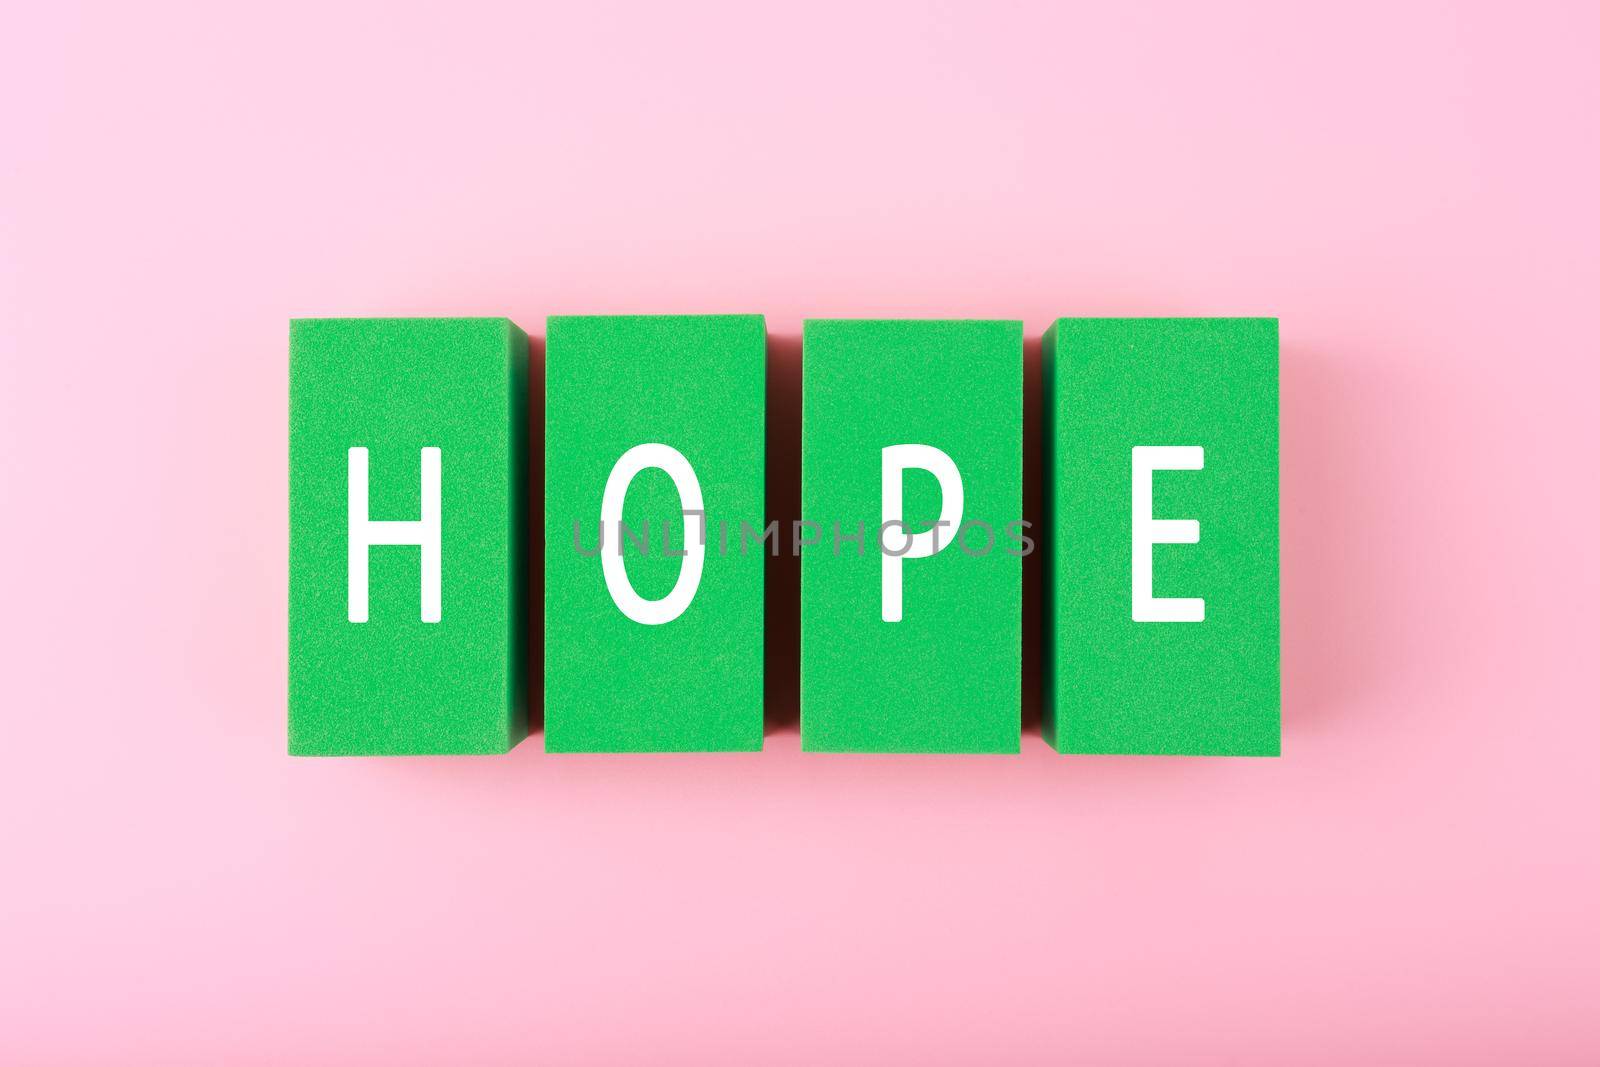 Hope single word written on green blocks against bright pink background by Senorina_Irina